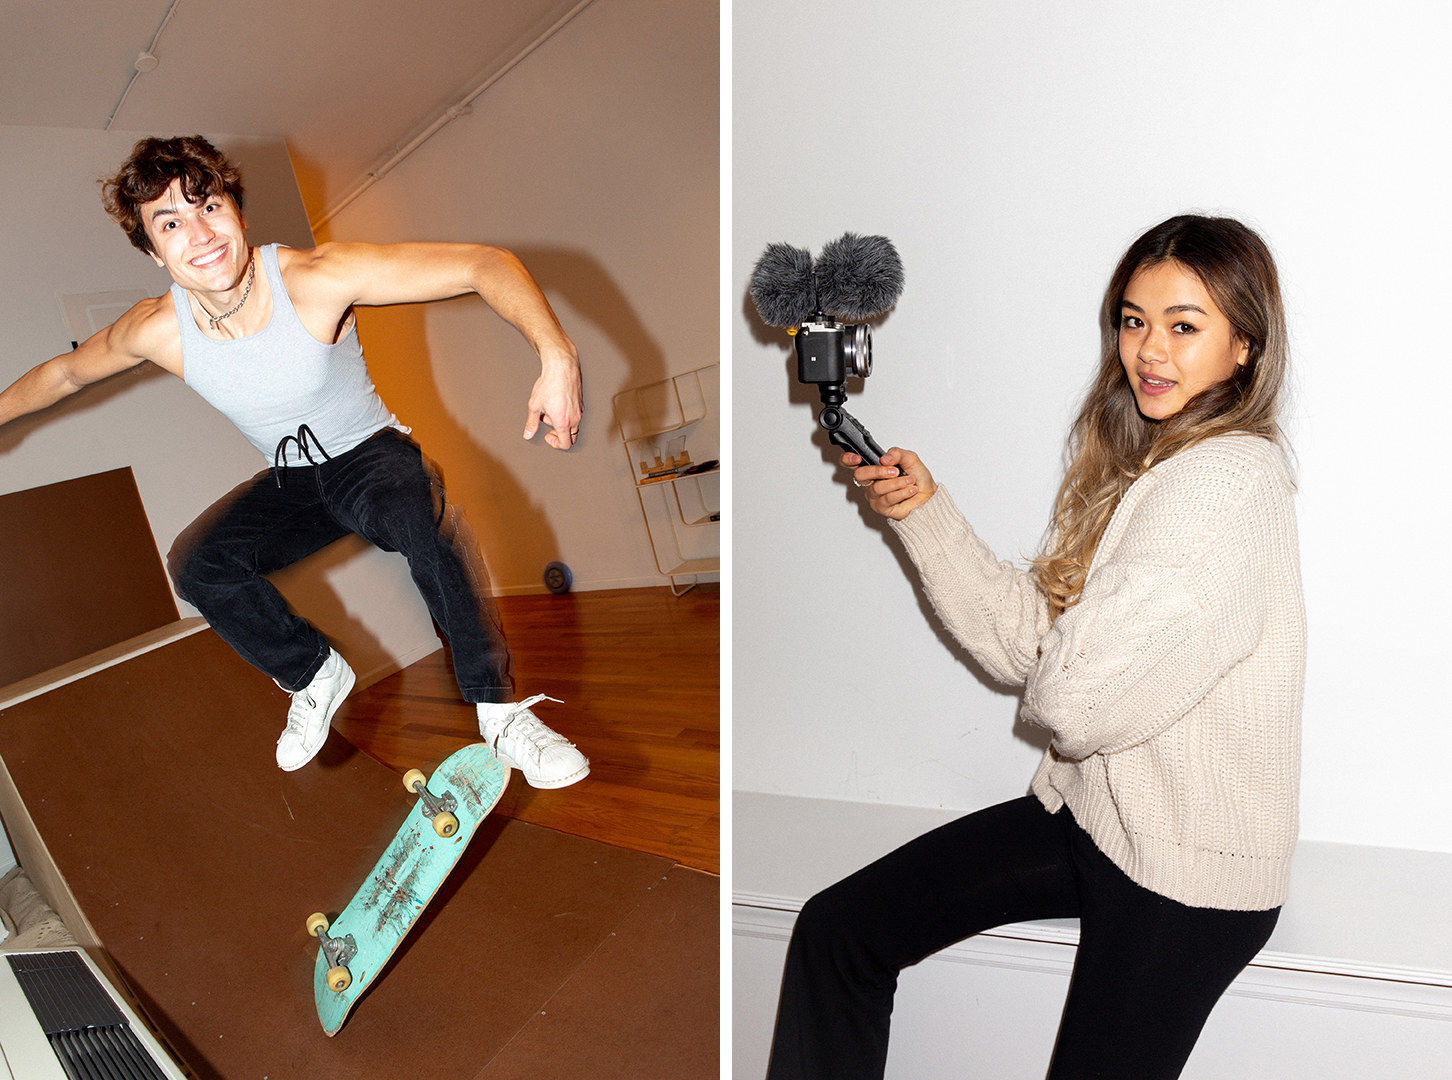 Wasaka lifts off a skateboard and Ashley holds a camera